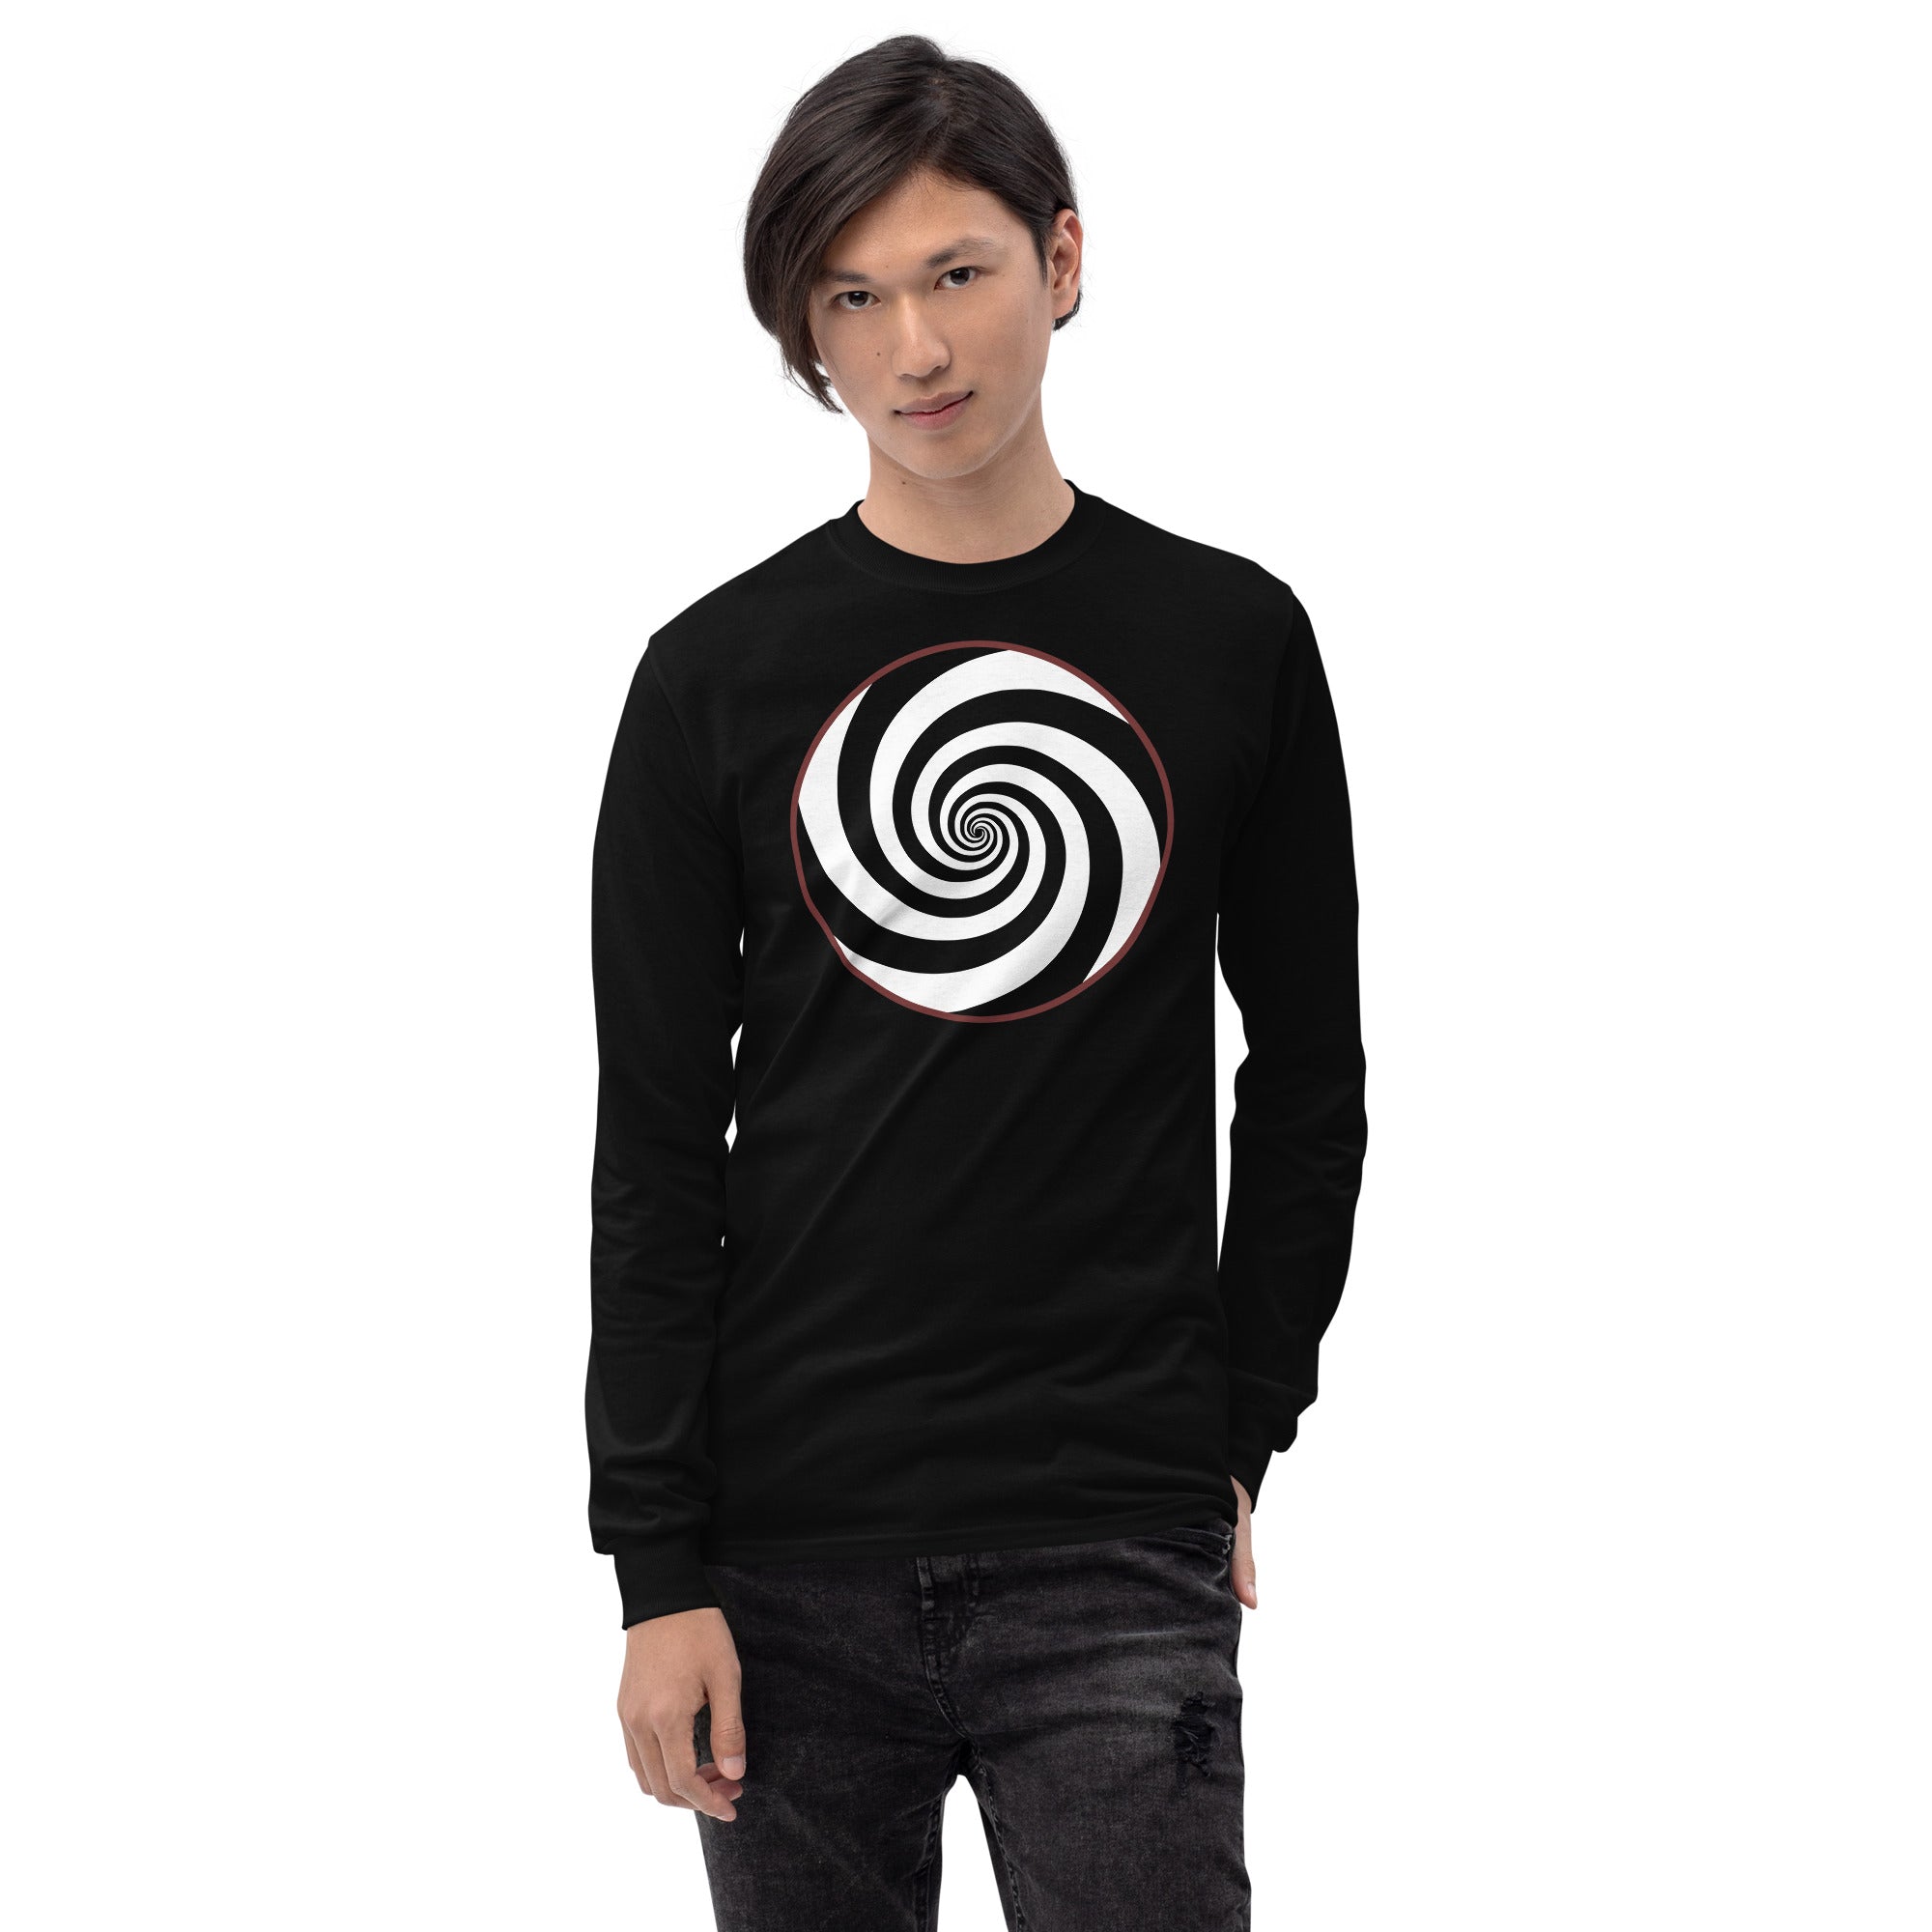 Hypnotic Hypnosis Spiral Swirl Illusion Twilight Zone Long Sleeve Shirt